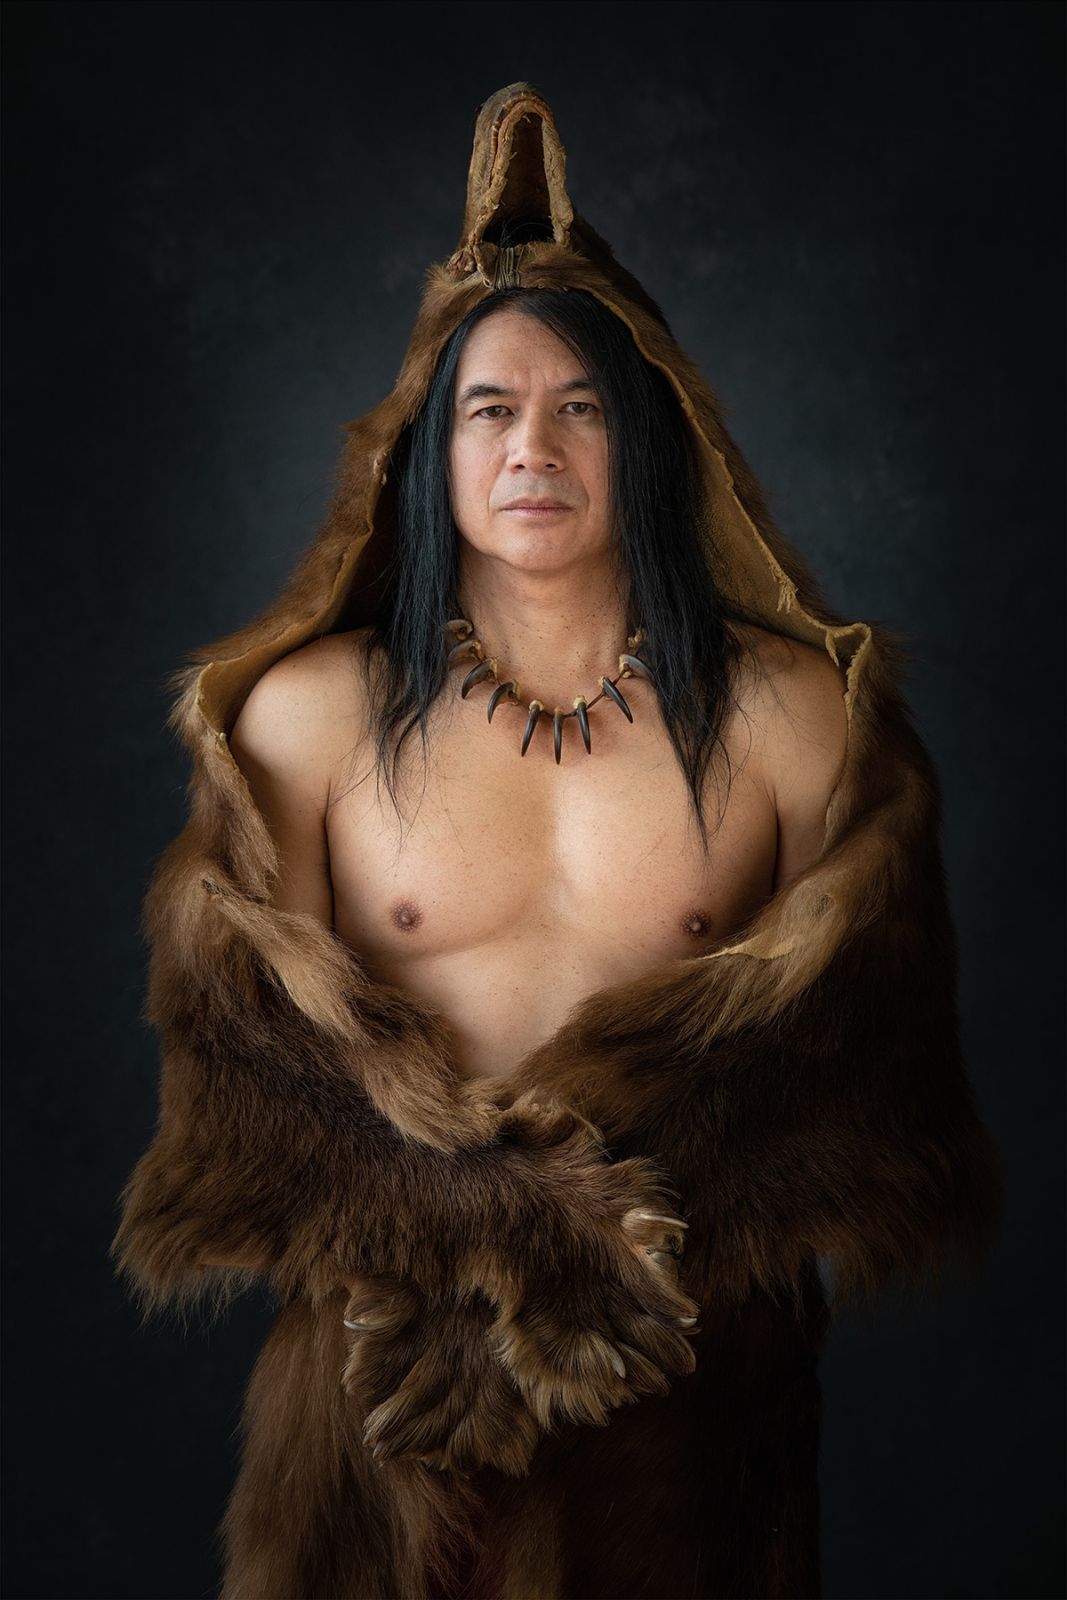 beautiful photos native americans by craig varjabedian